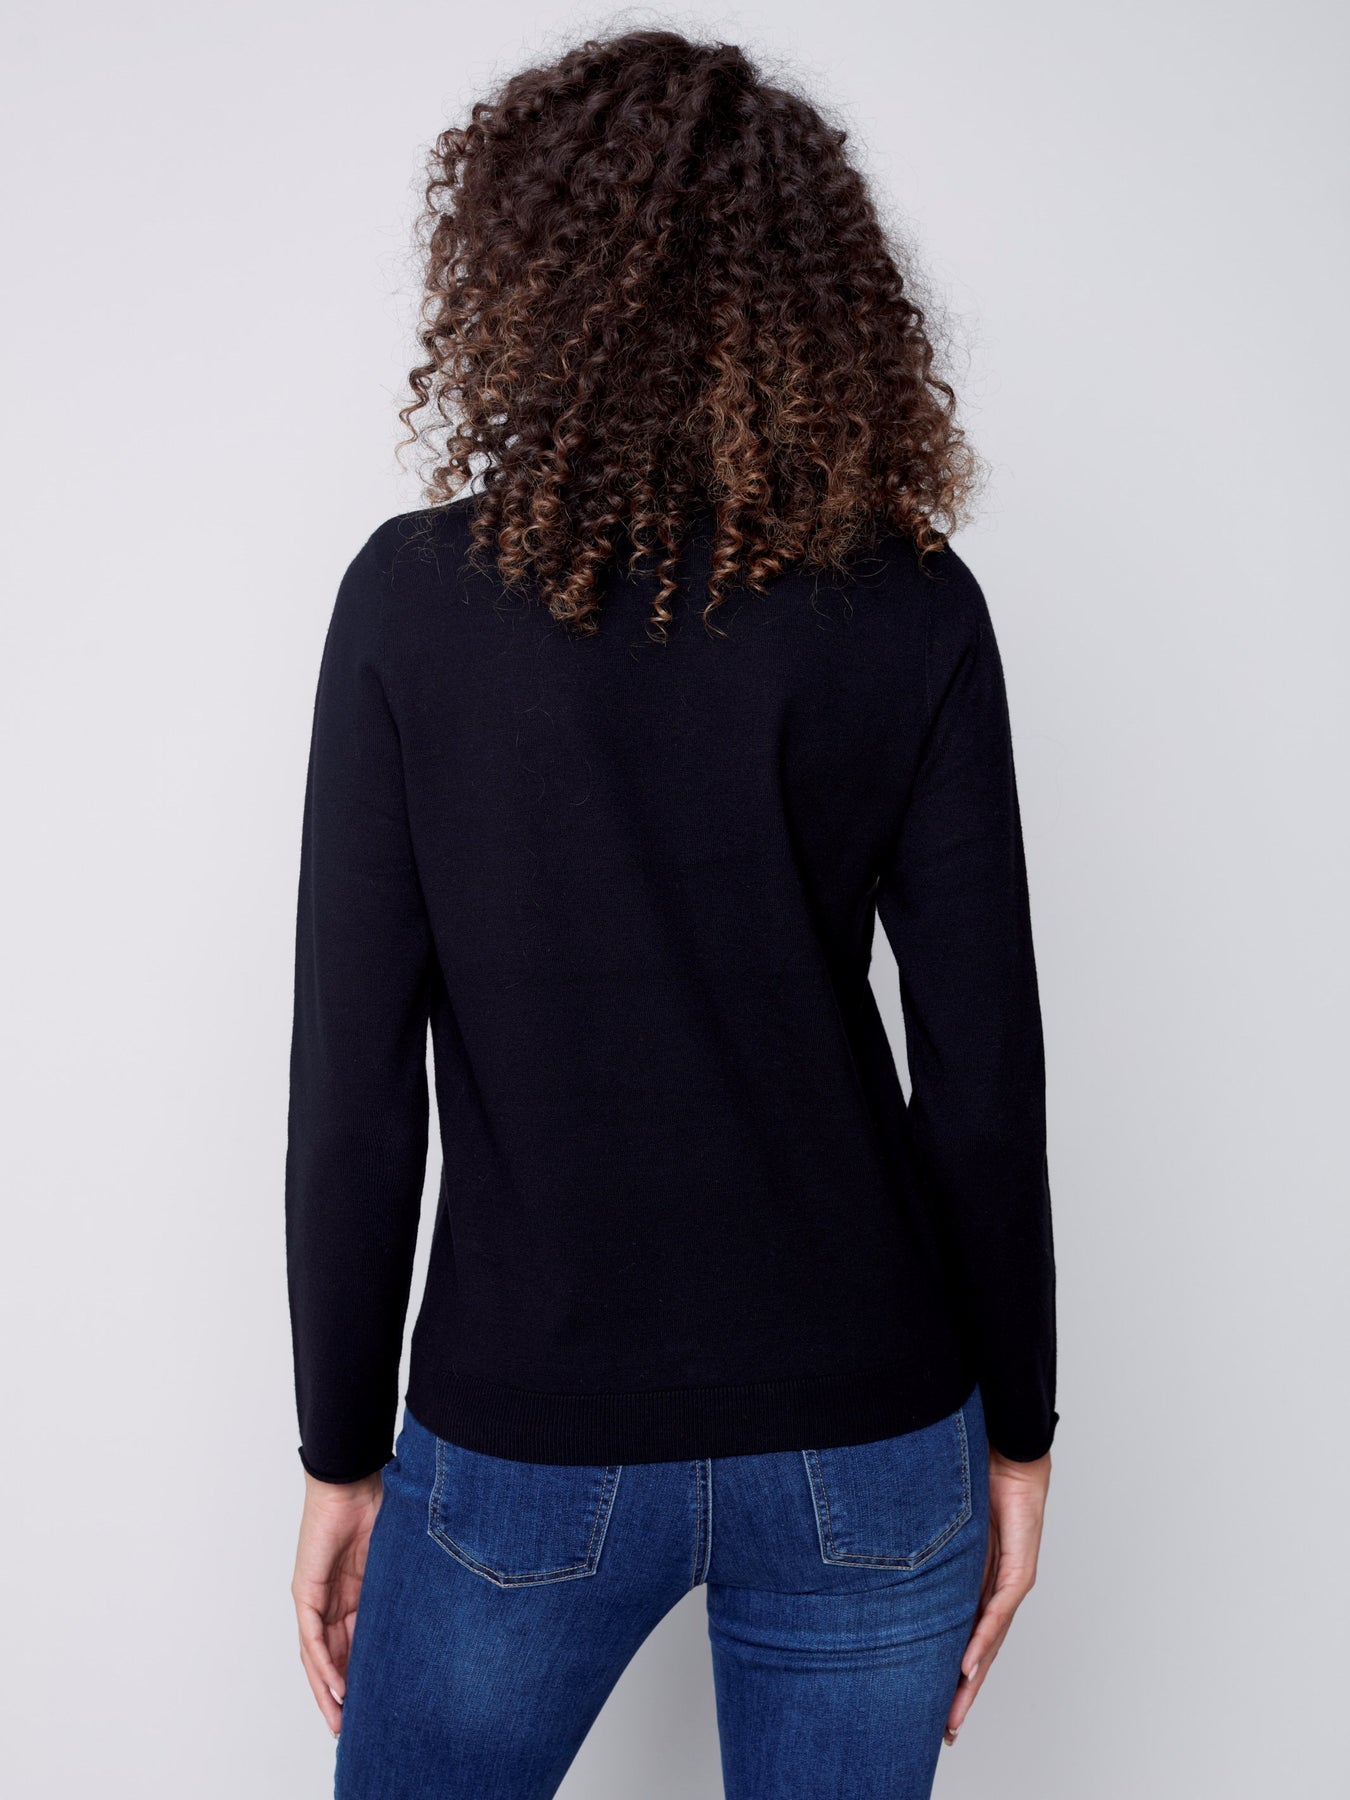 Charlie B Knit Sweater with Diagonal Zipper Detail - Black